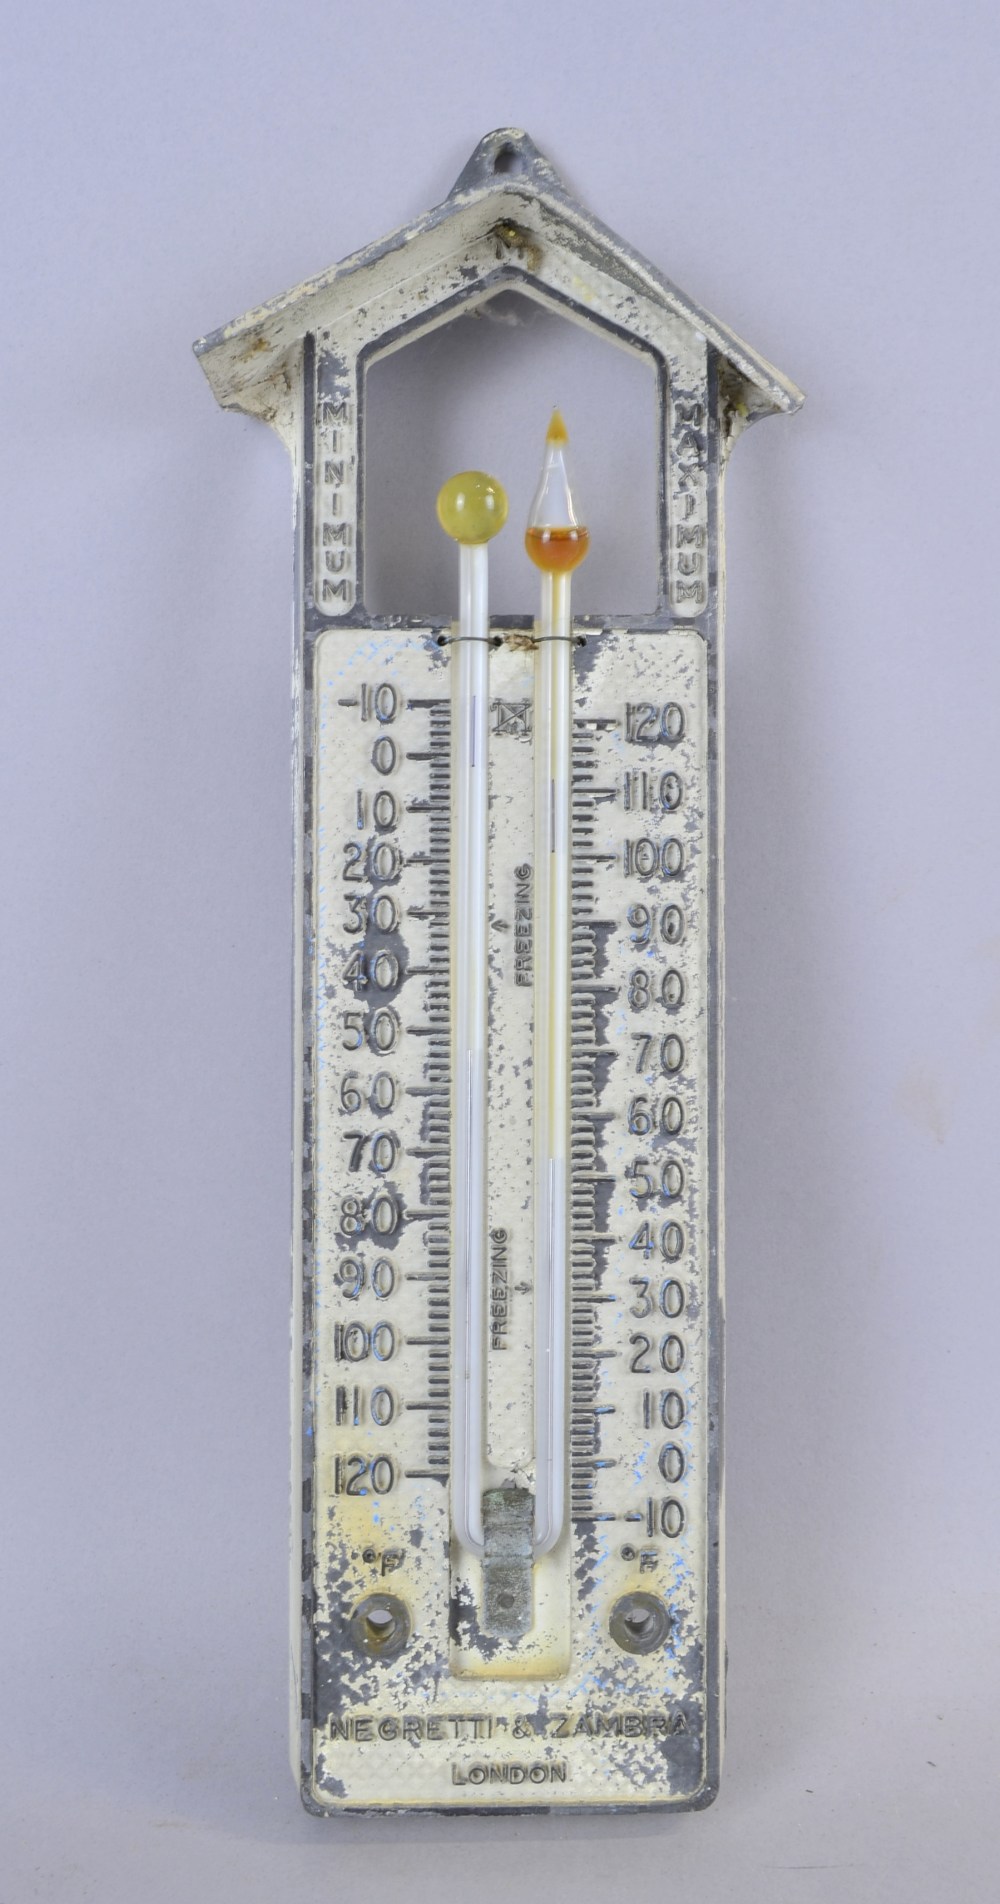 Negretti and Zambra barometer in aluminum frame for a greenhouse